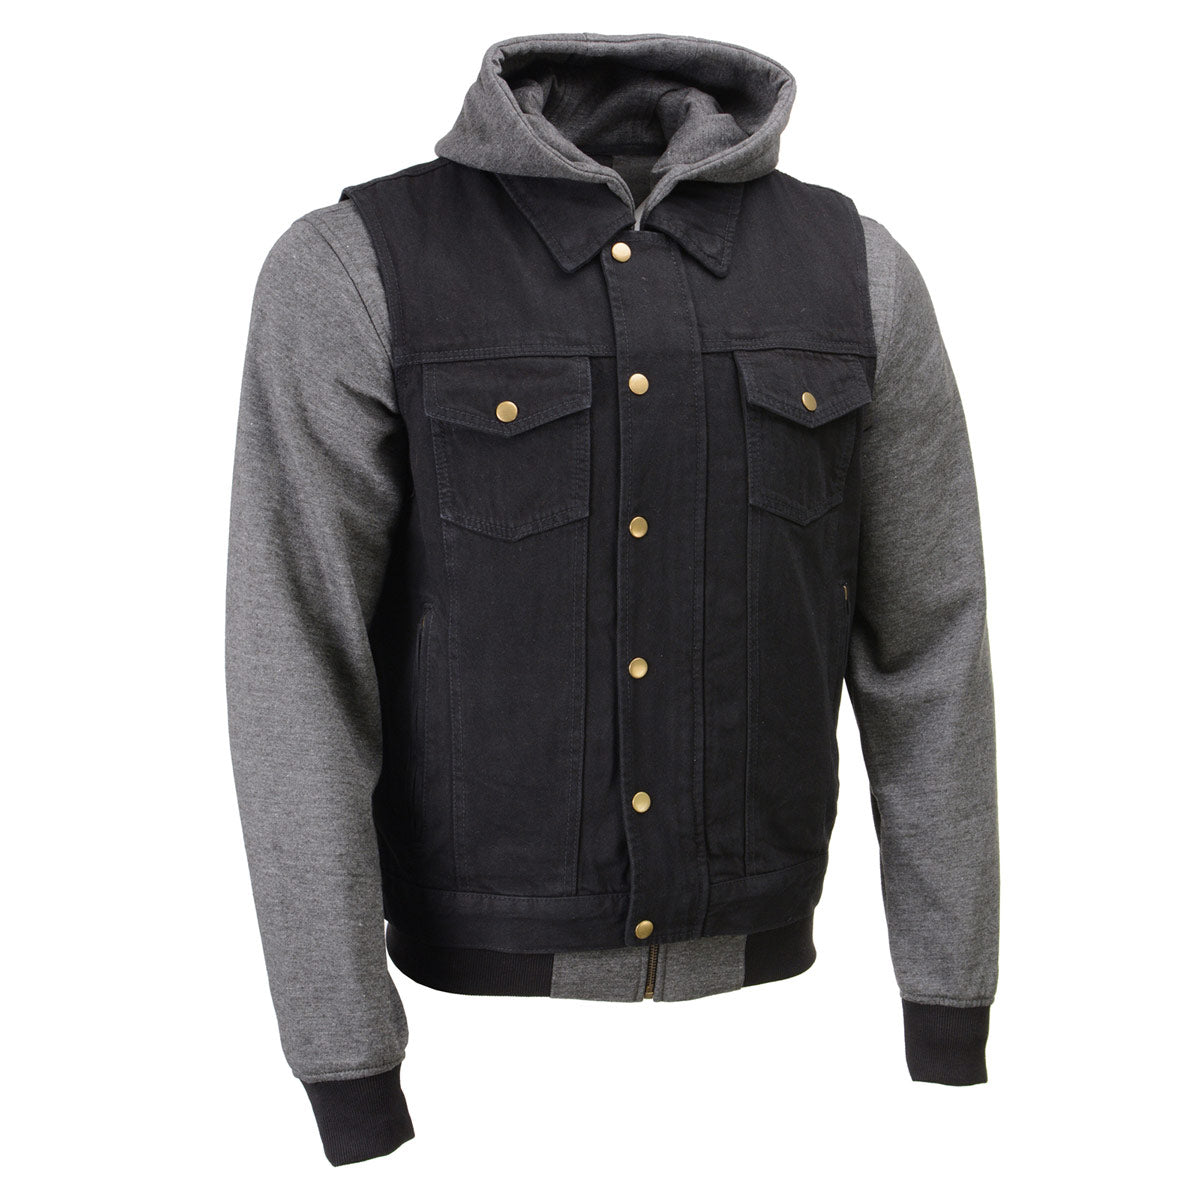 Buy Lentta Denim Jacket Men's Fall Fashion Zip Up Hoodie Jean Jacket Button  Down Jeans Coat, Darkblue, Small at Amazon.in